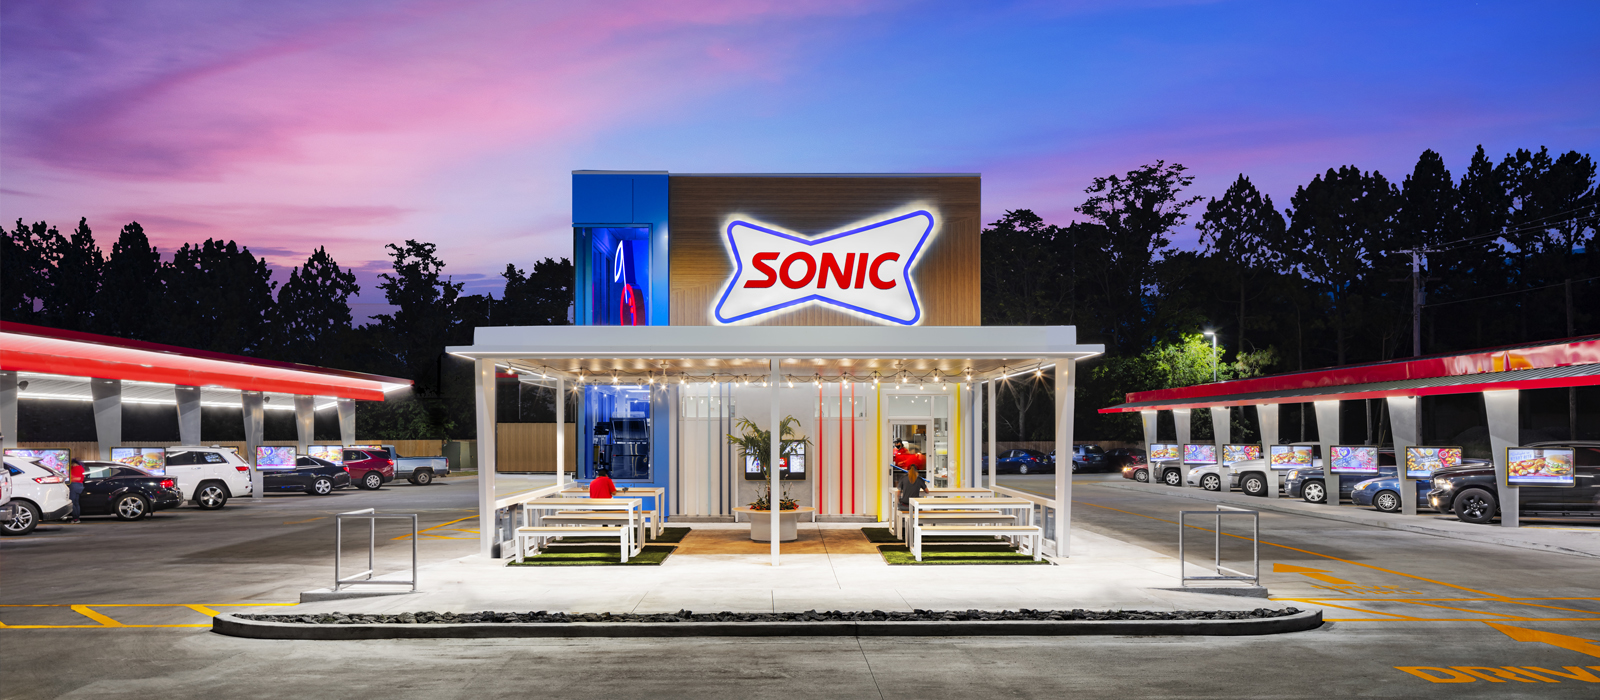 First Look: SONIC Unveils Bold New Restaurant Design